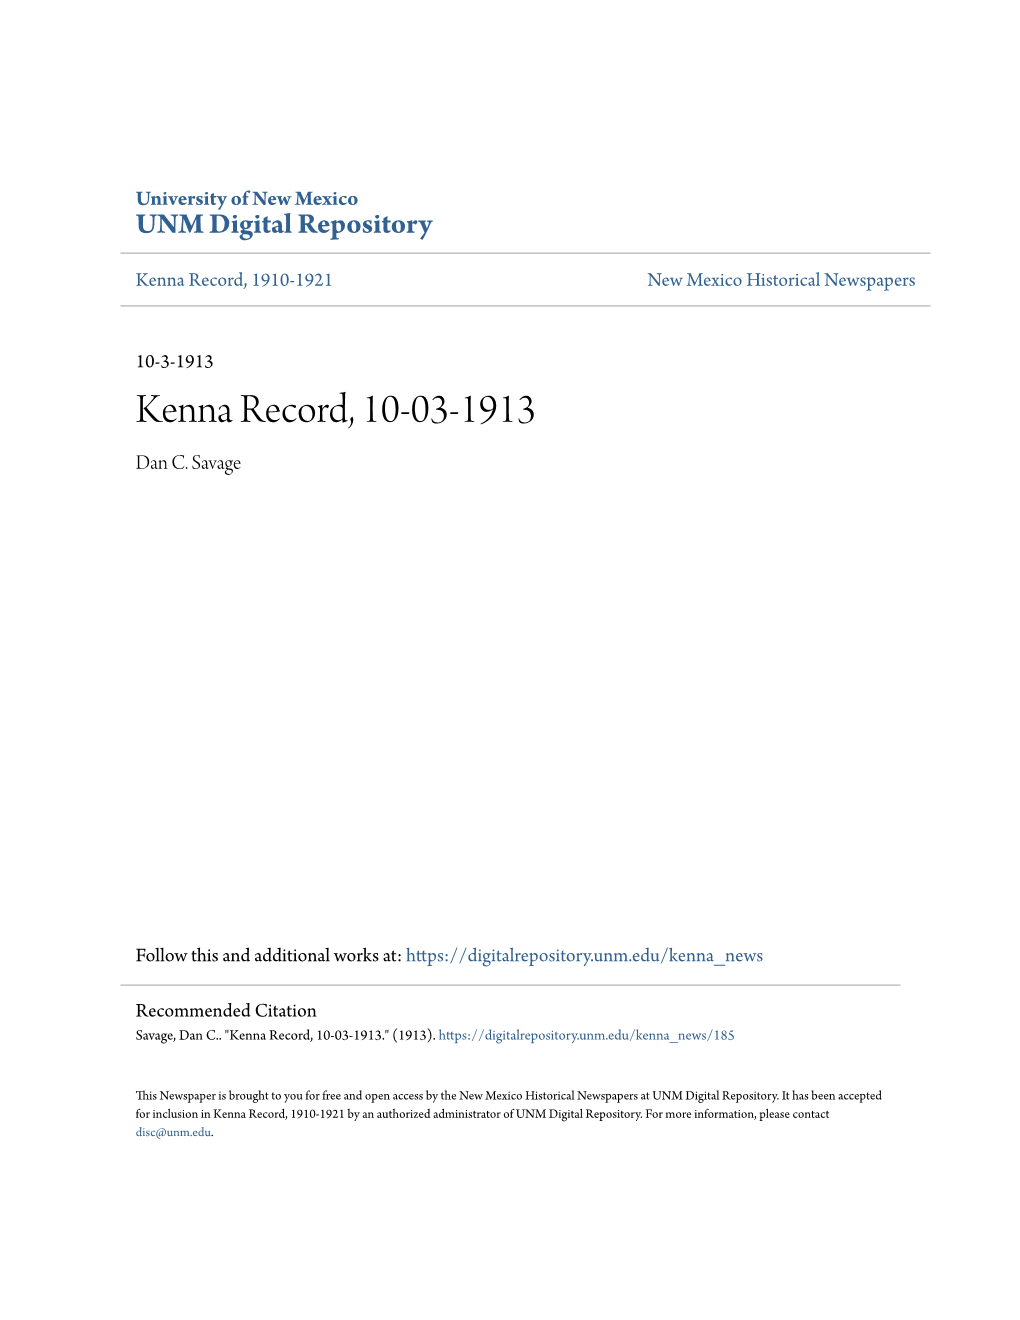 Kenna Record, 10-03-1913 Dan C